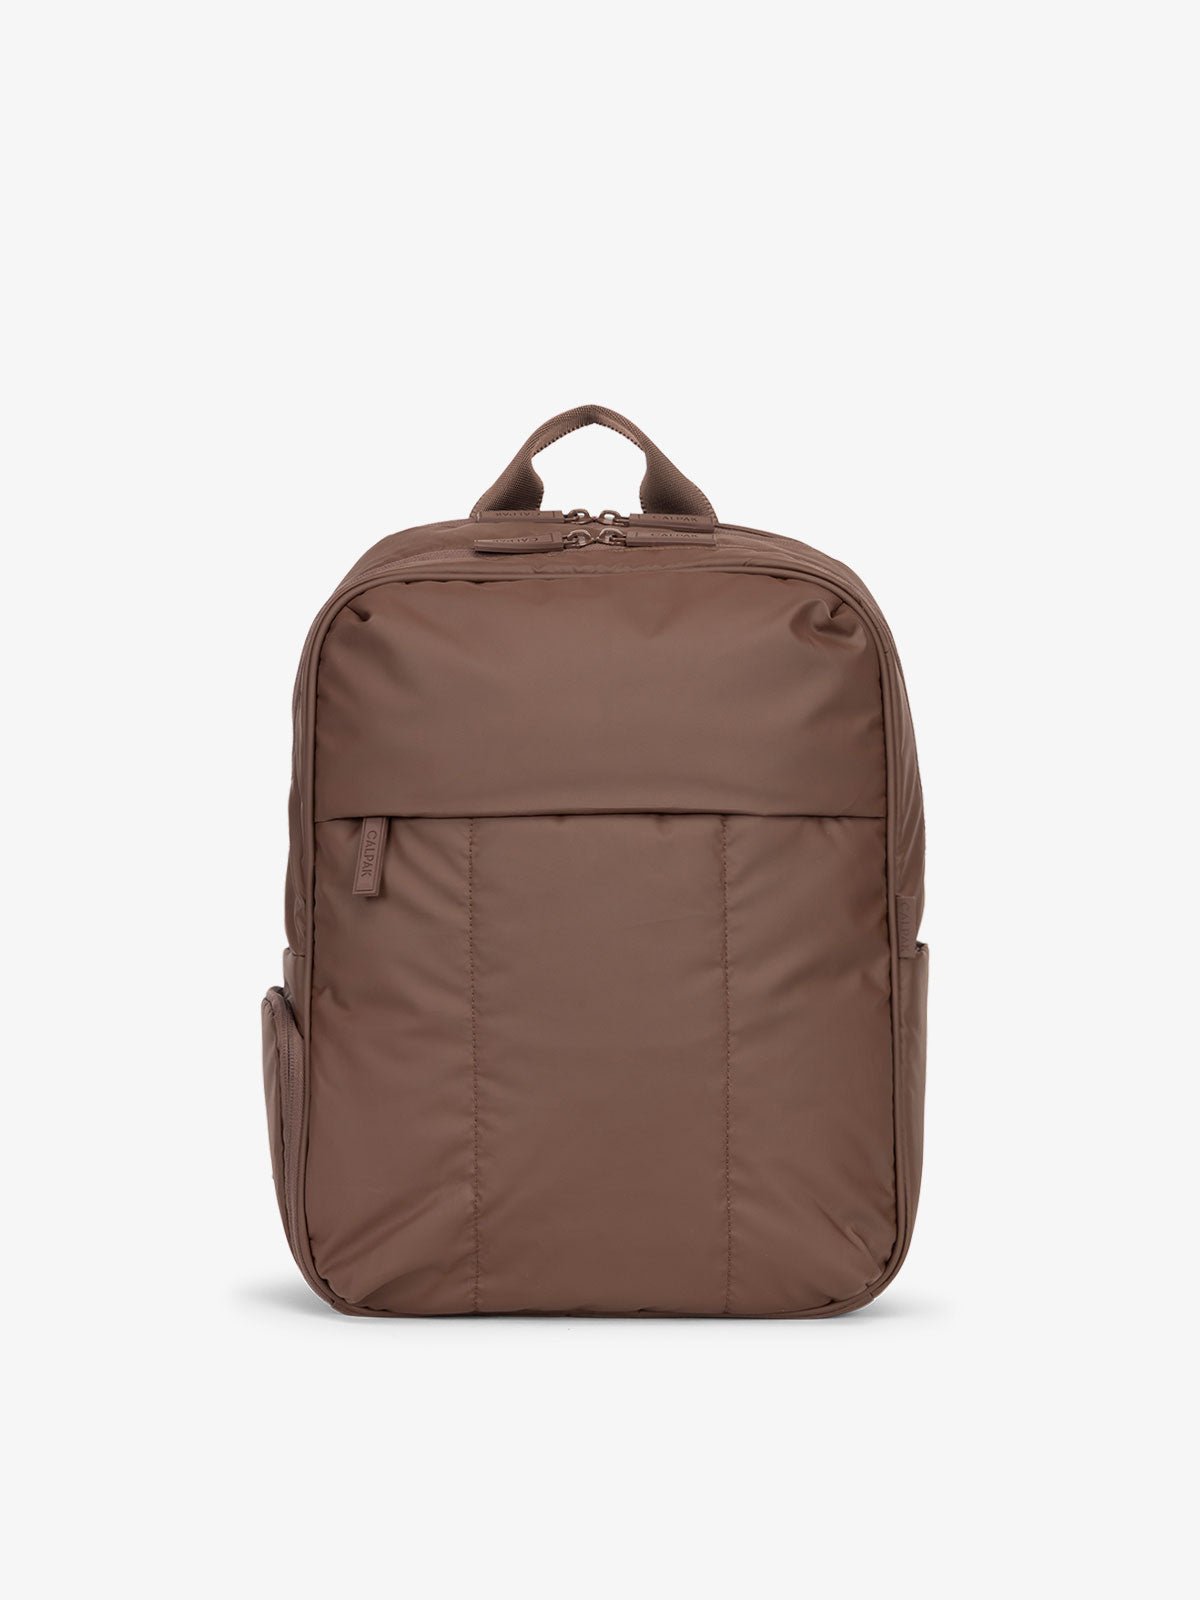 CALPAK Luka Laptop Backpack for school in dark brown walnut